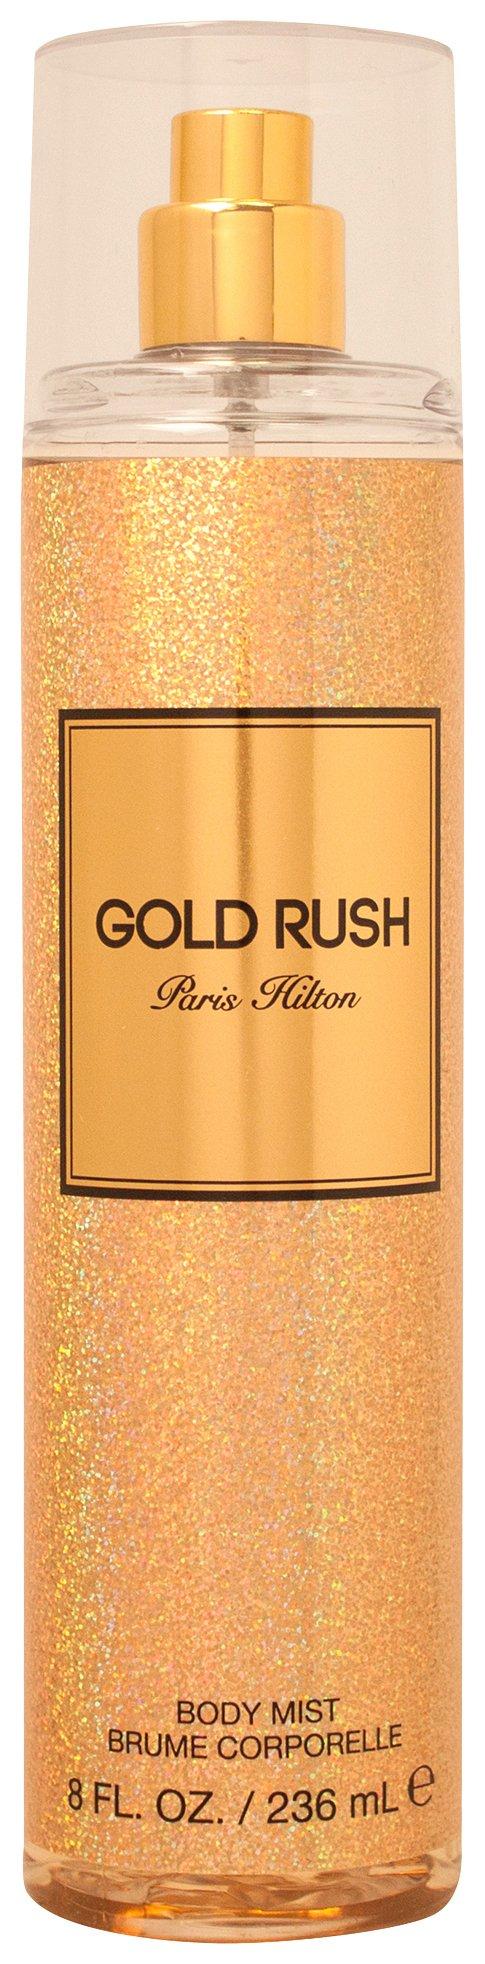 Paris Hilton Gold Rush Womens 8 fl. oz.